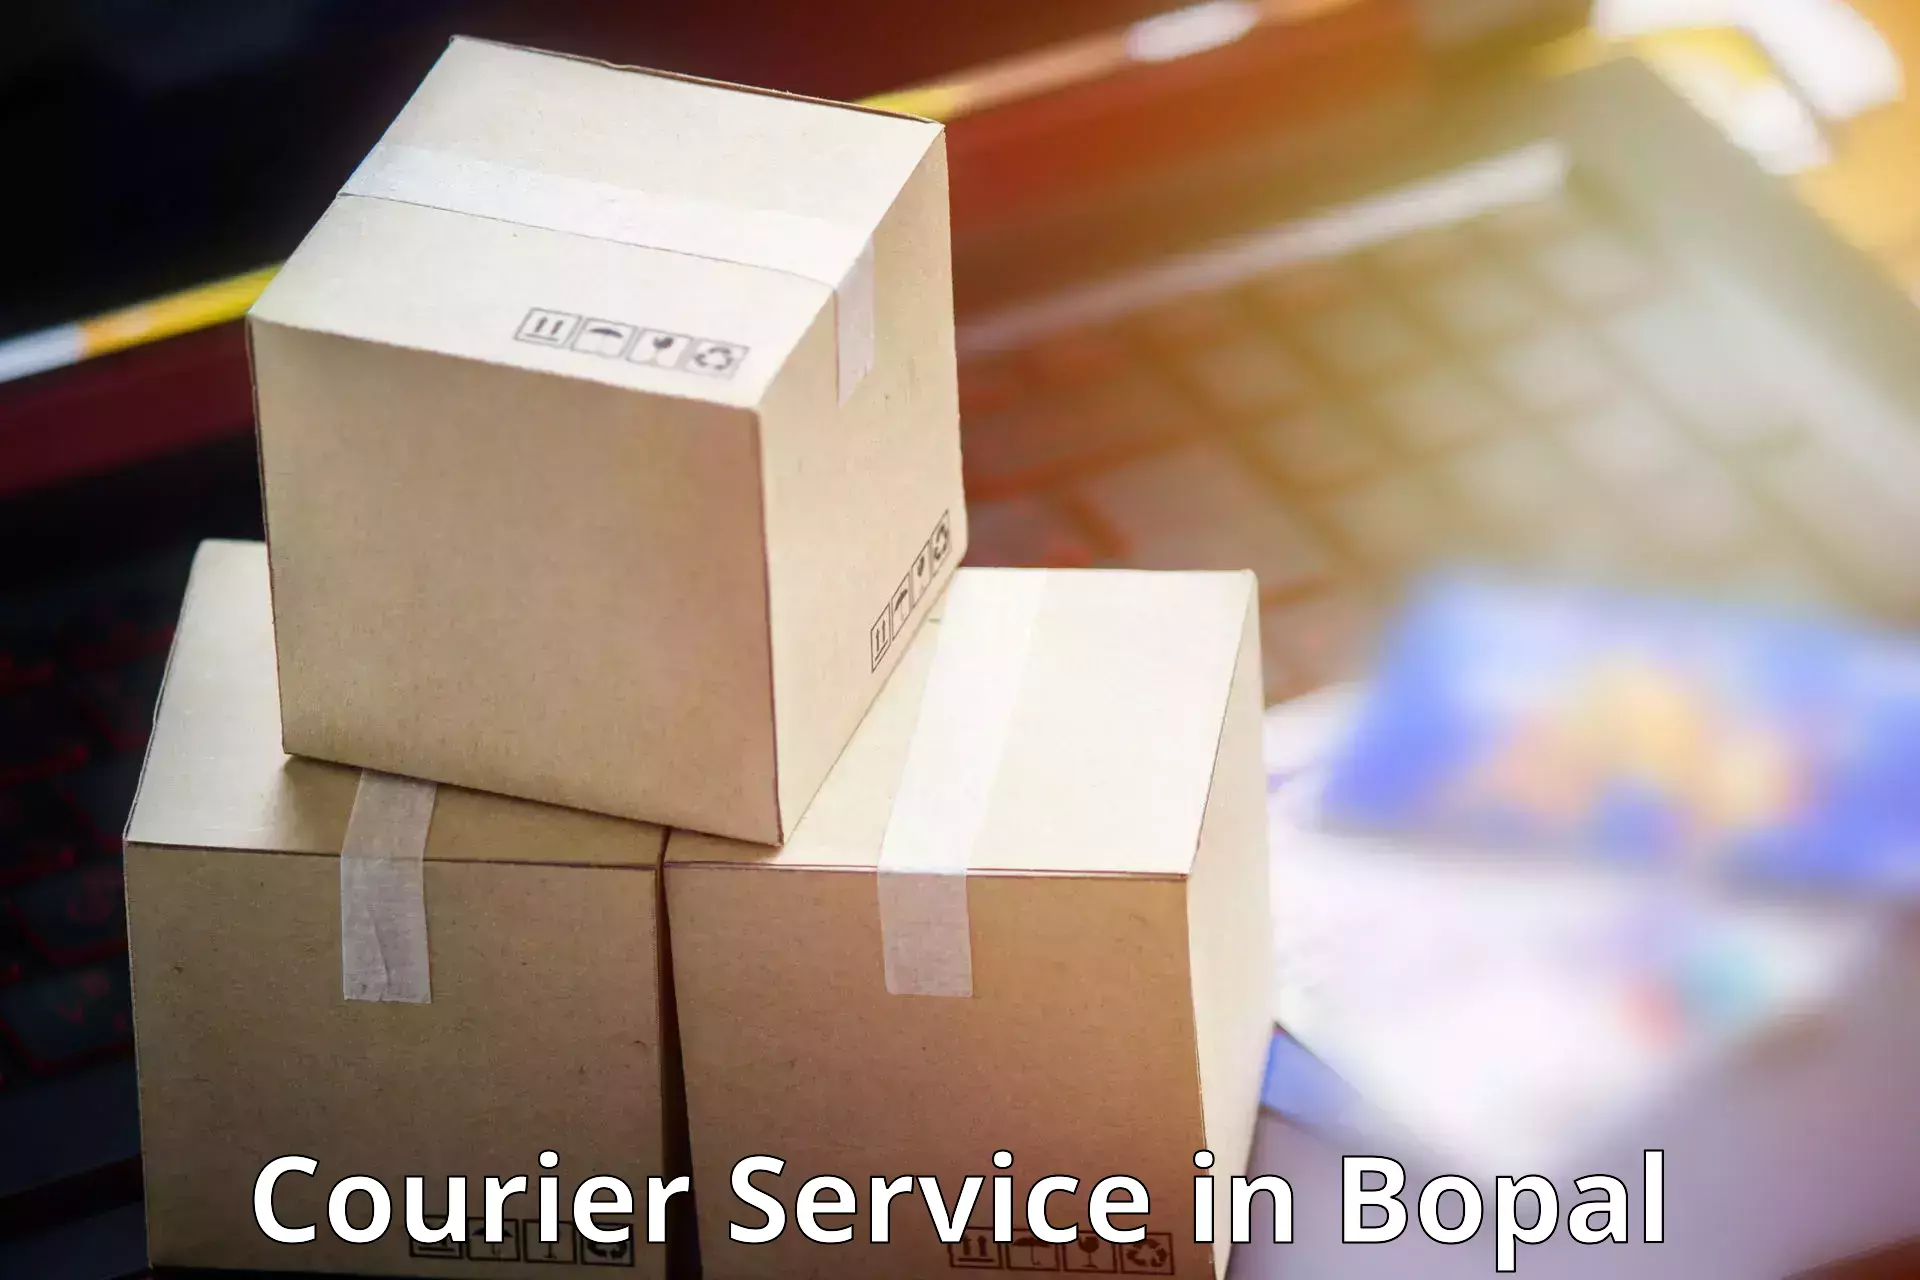 Professional parcel services in Bopal